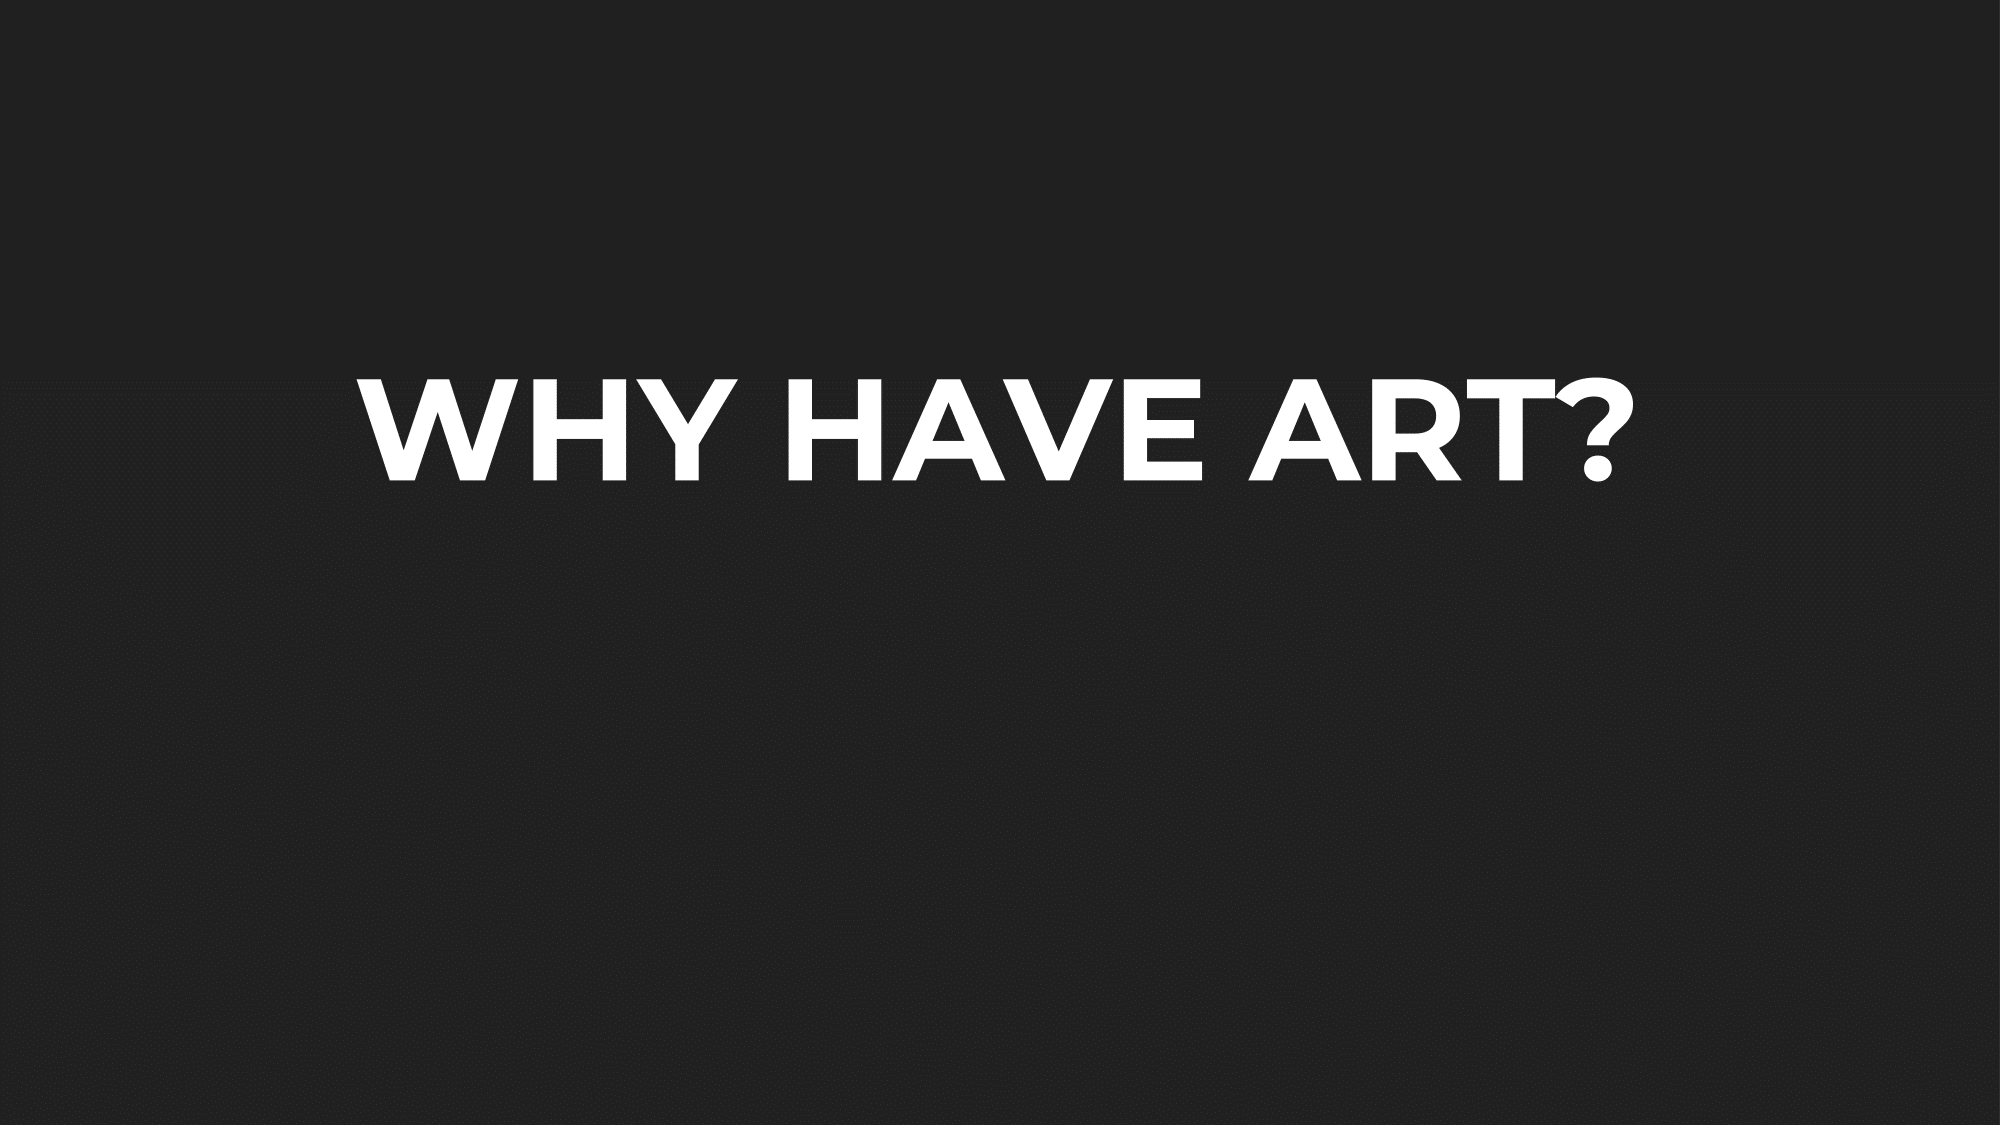 SLIDE: WHY HAVE ART?